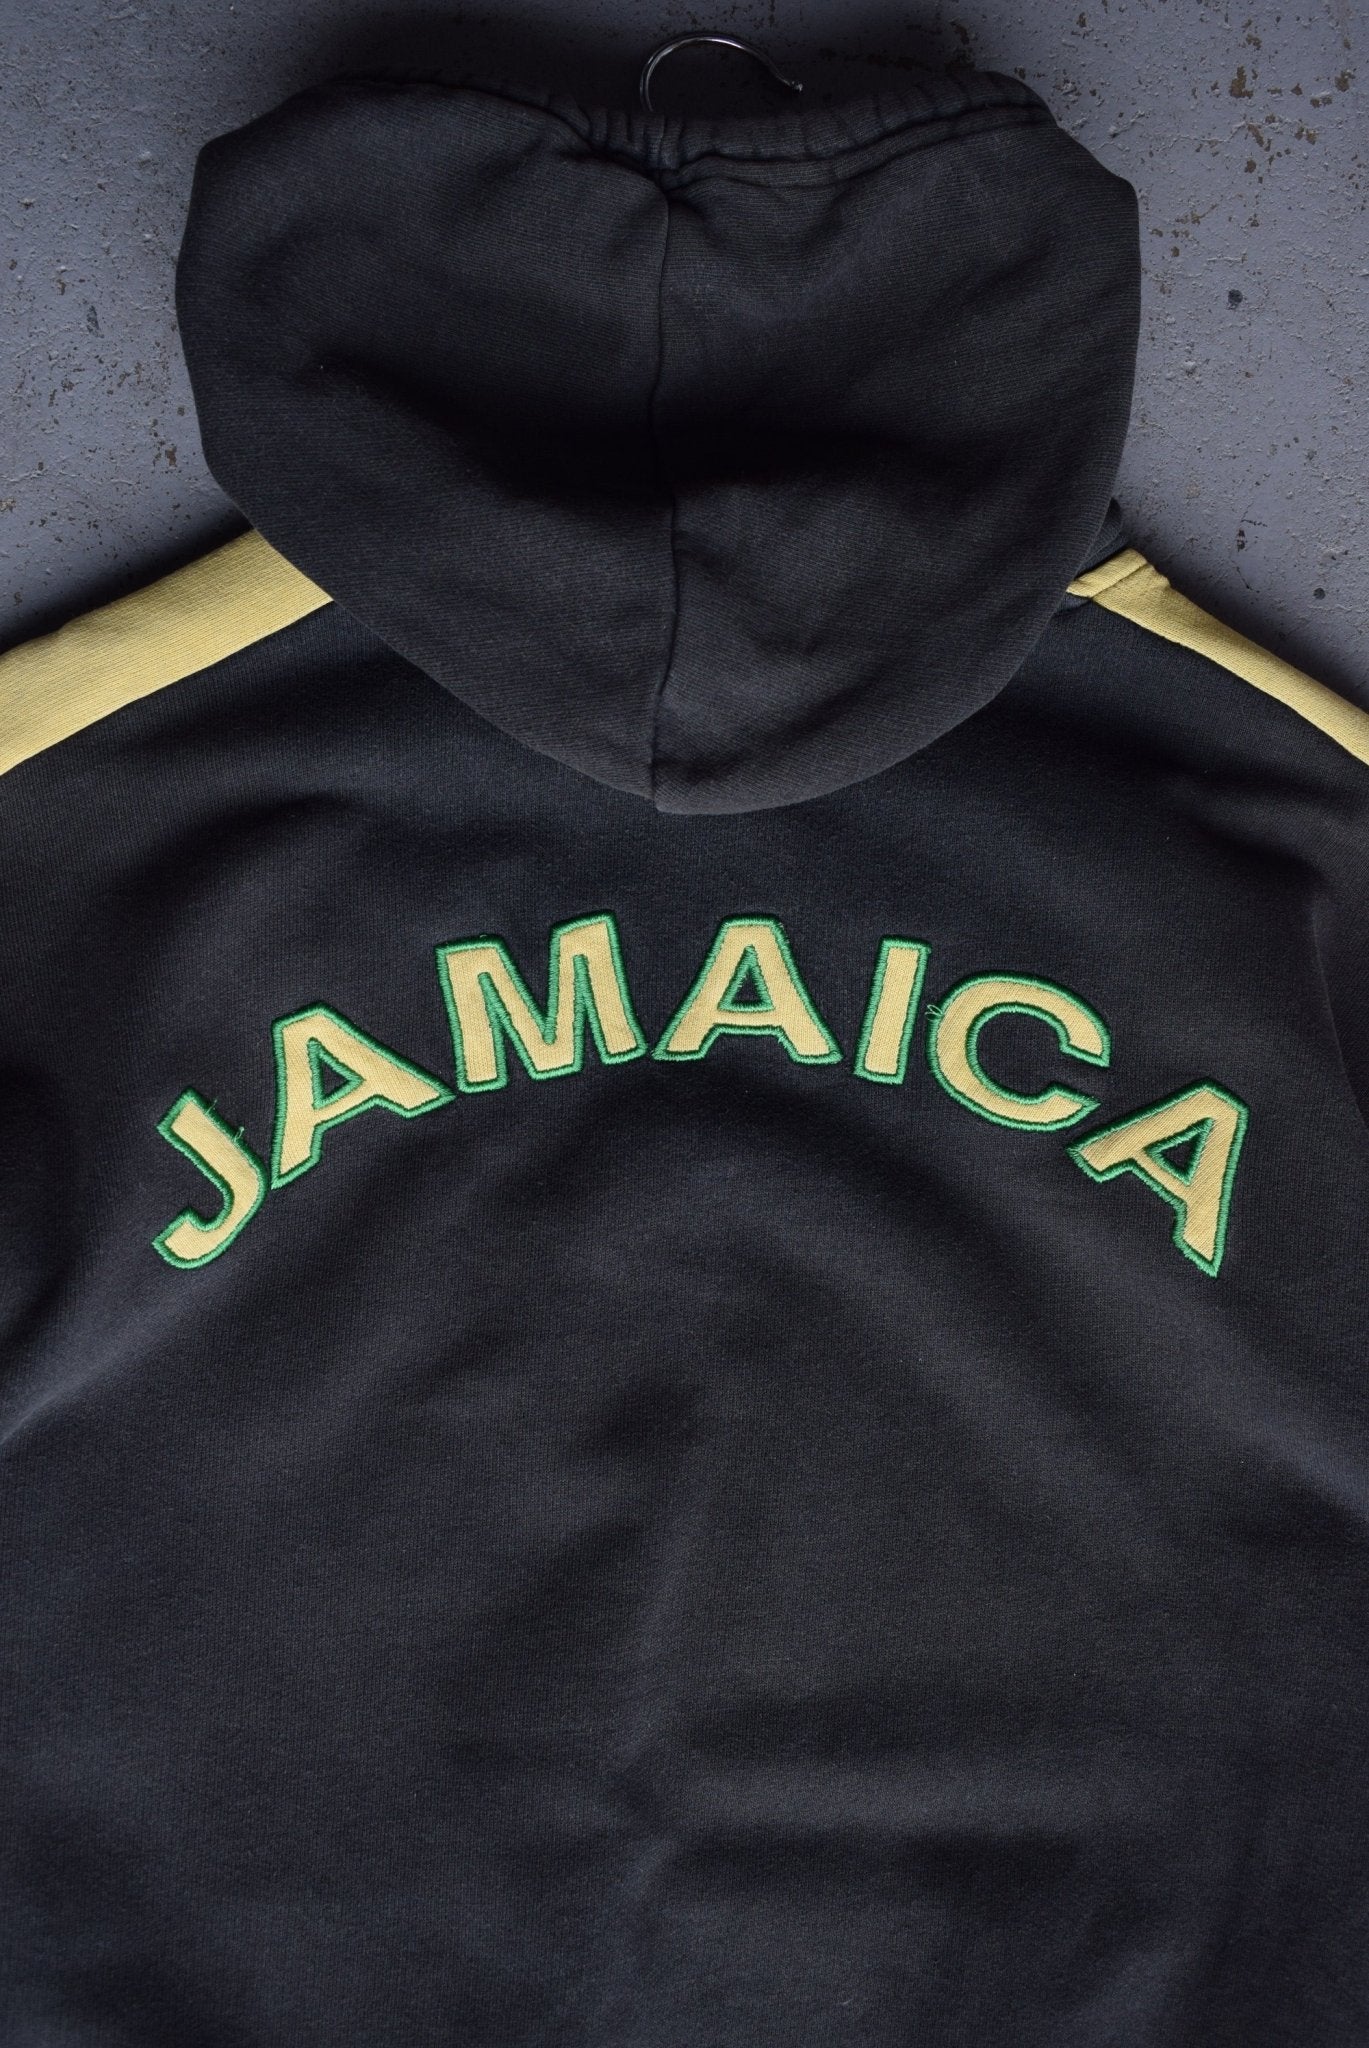 Vintage Puma x Jamaica Embroidered Hoodie (M) - Retrospective Store